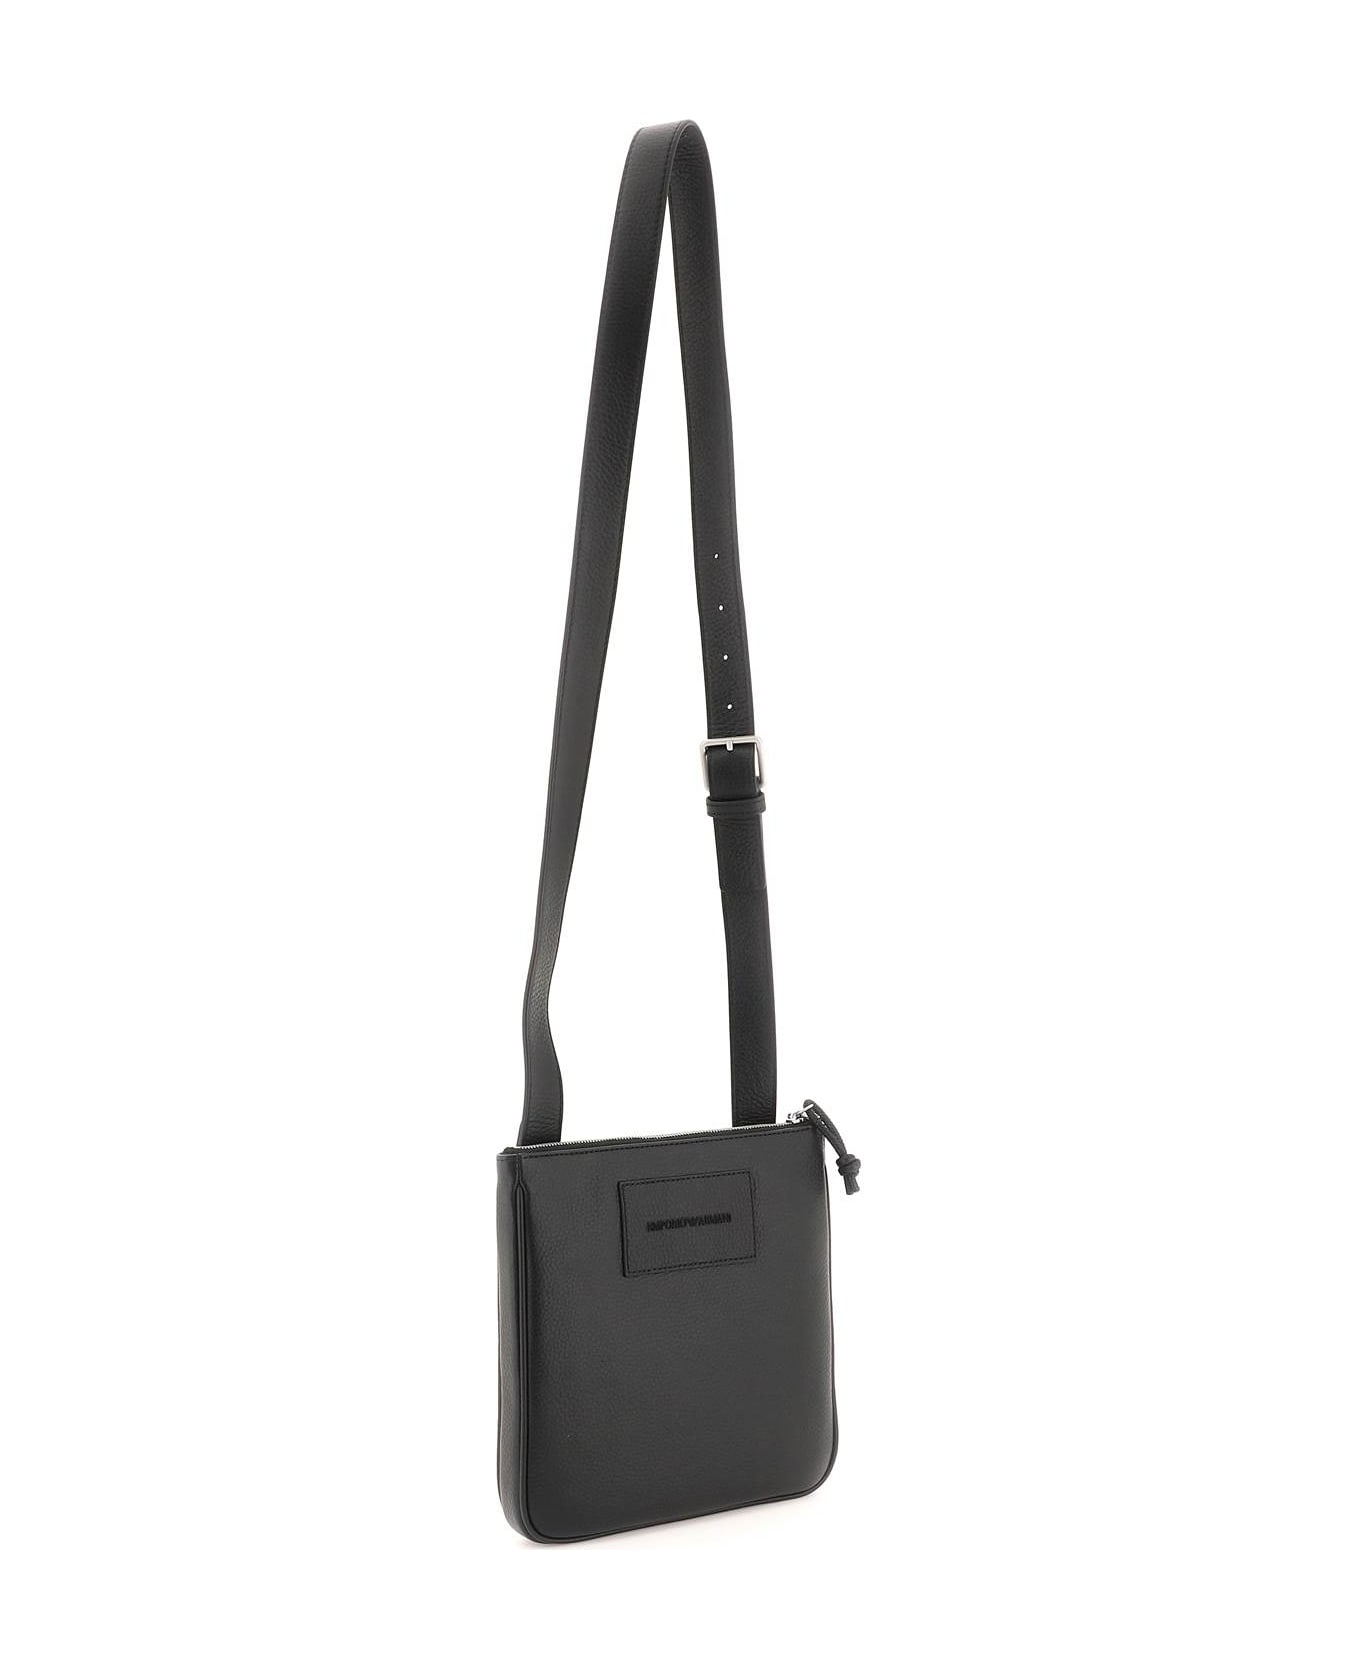 Emporio Armani Leather Crossbody Bag - NERO (Black)